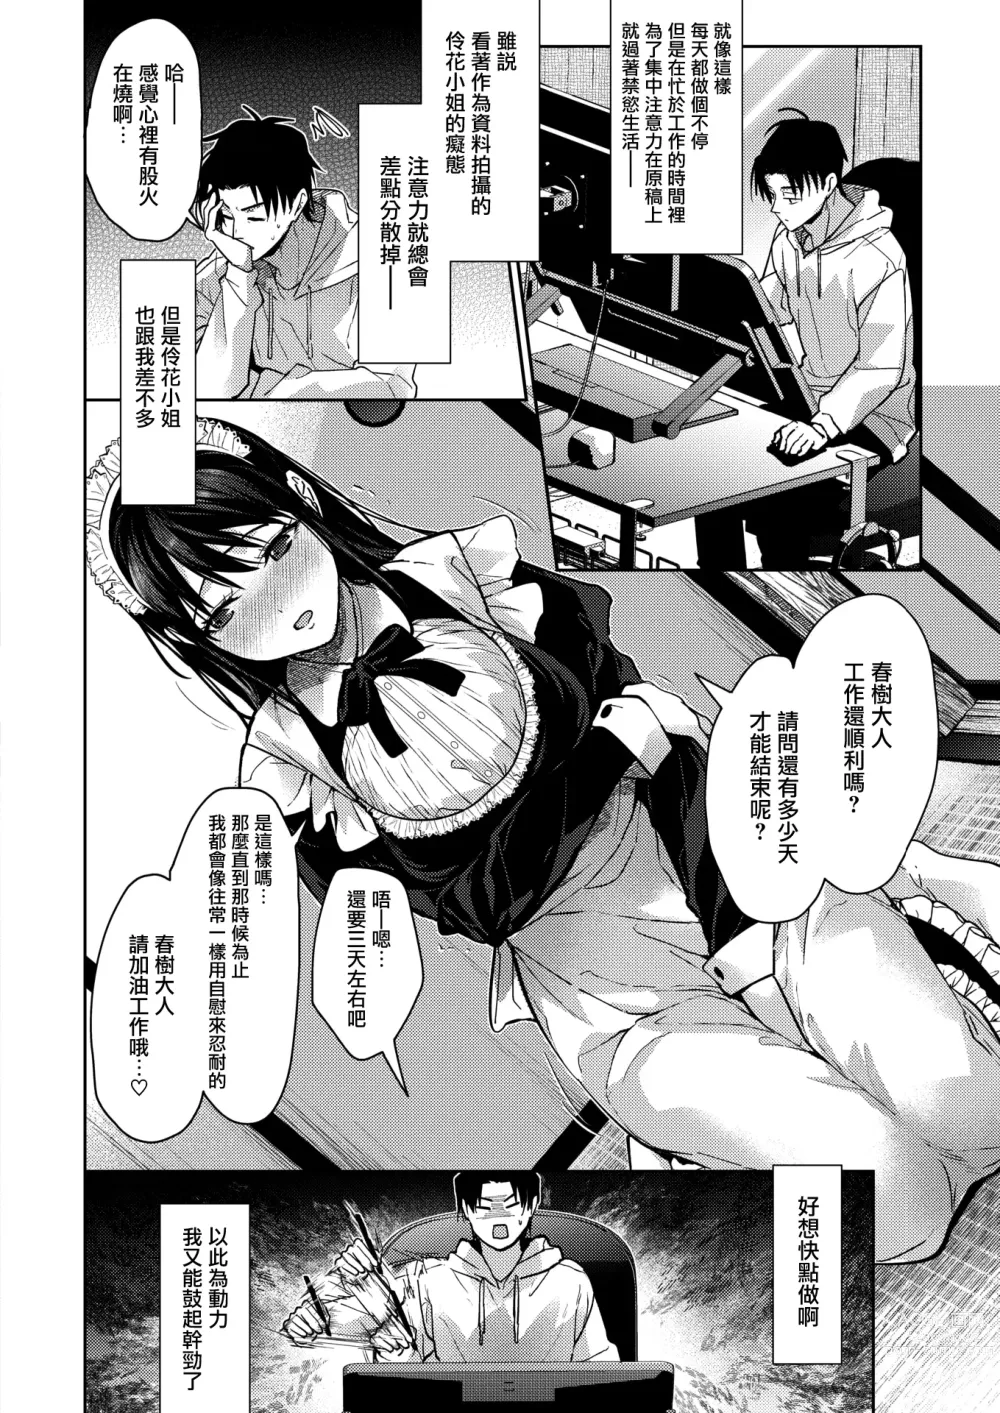 Page 31 of manga Maid Kurashi